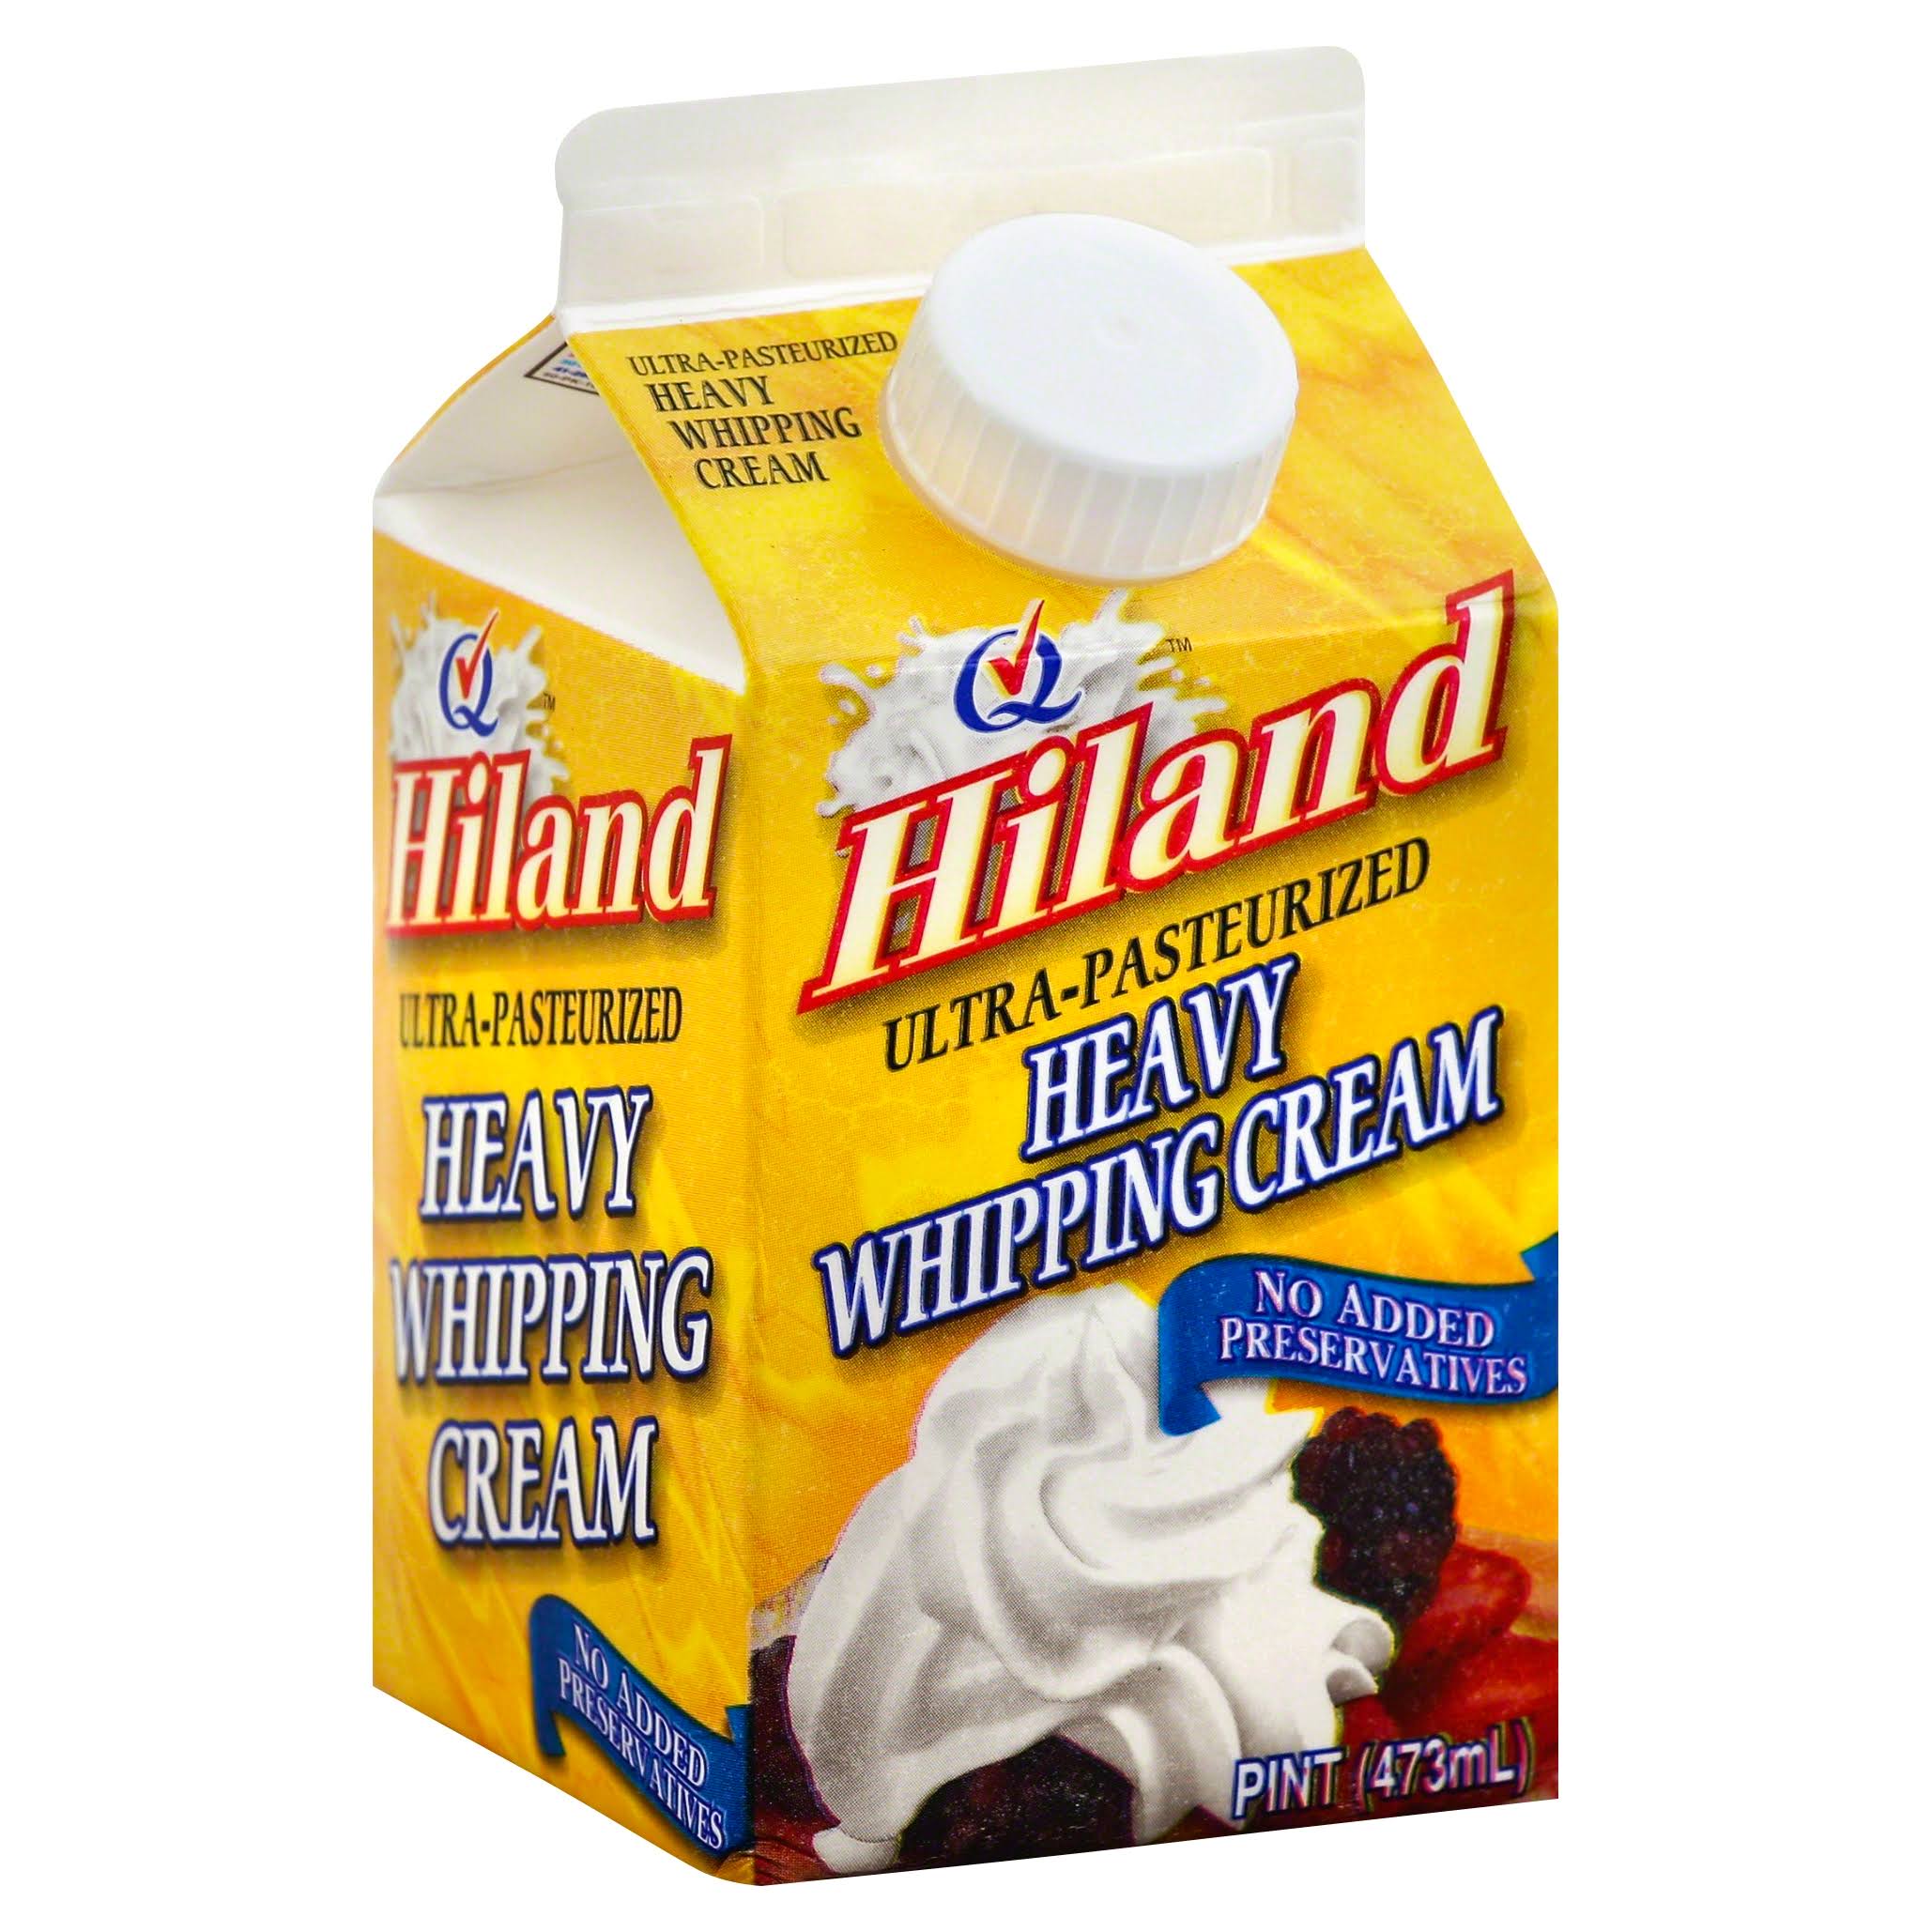 Hiland Whipping Cream, Heavy - 1 pt